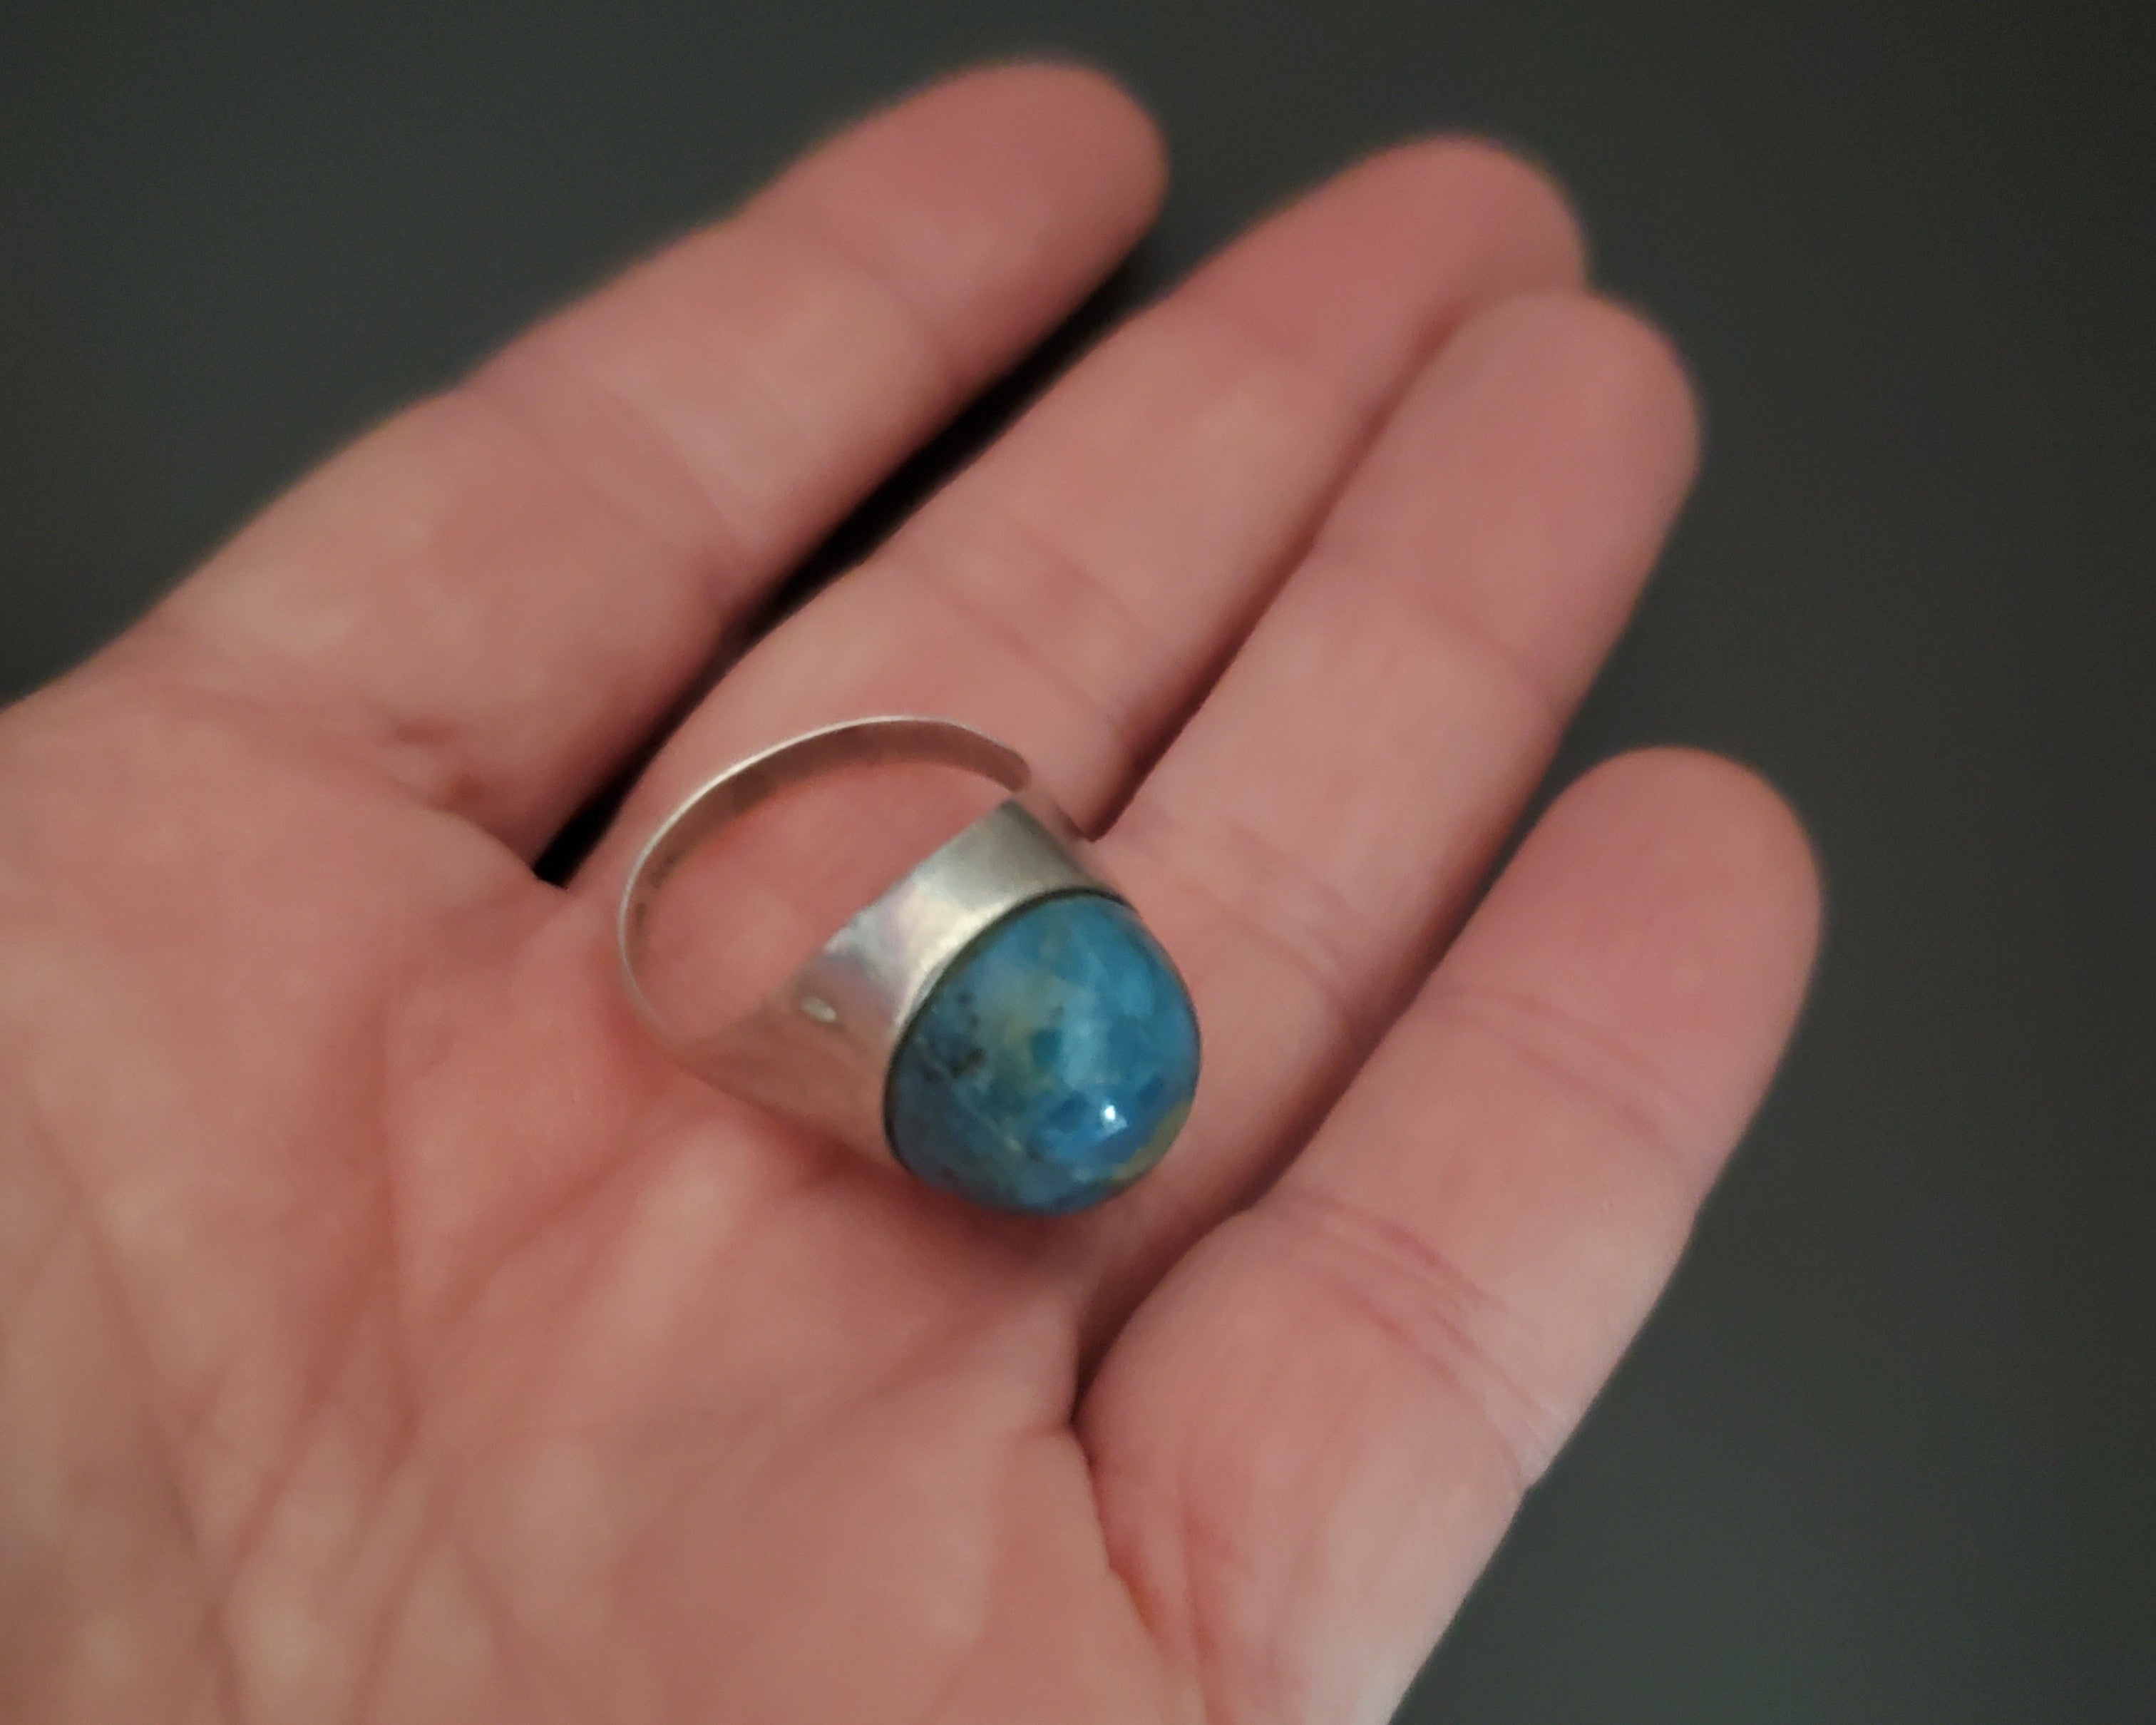 Ethnic Blue Aventurine Ring from India - Size 7